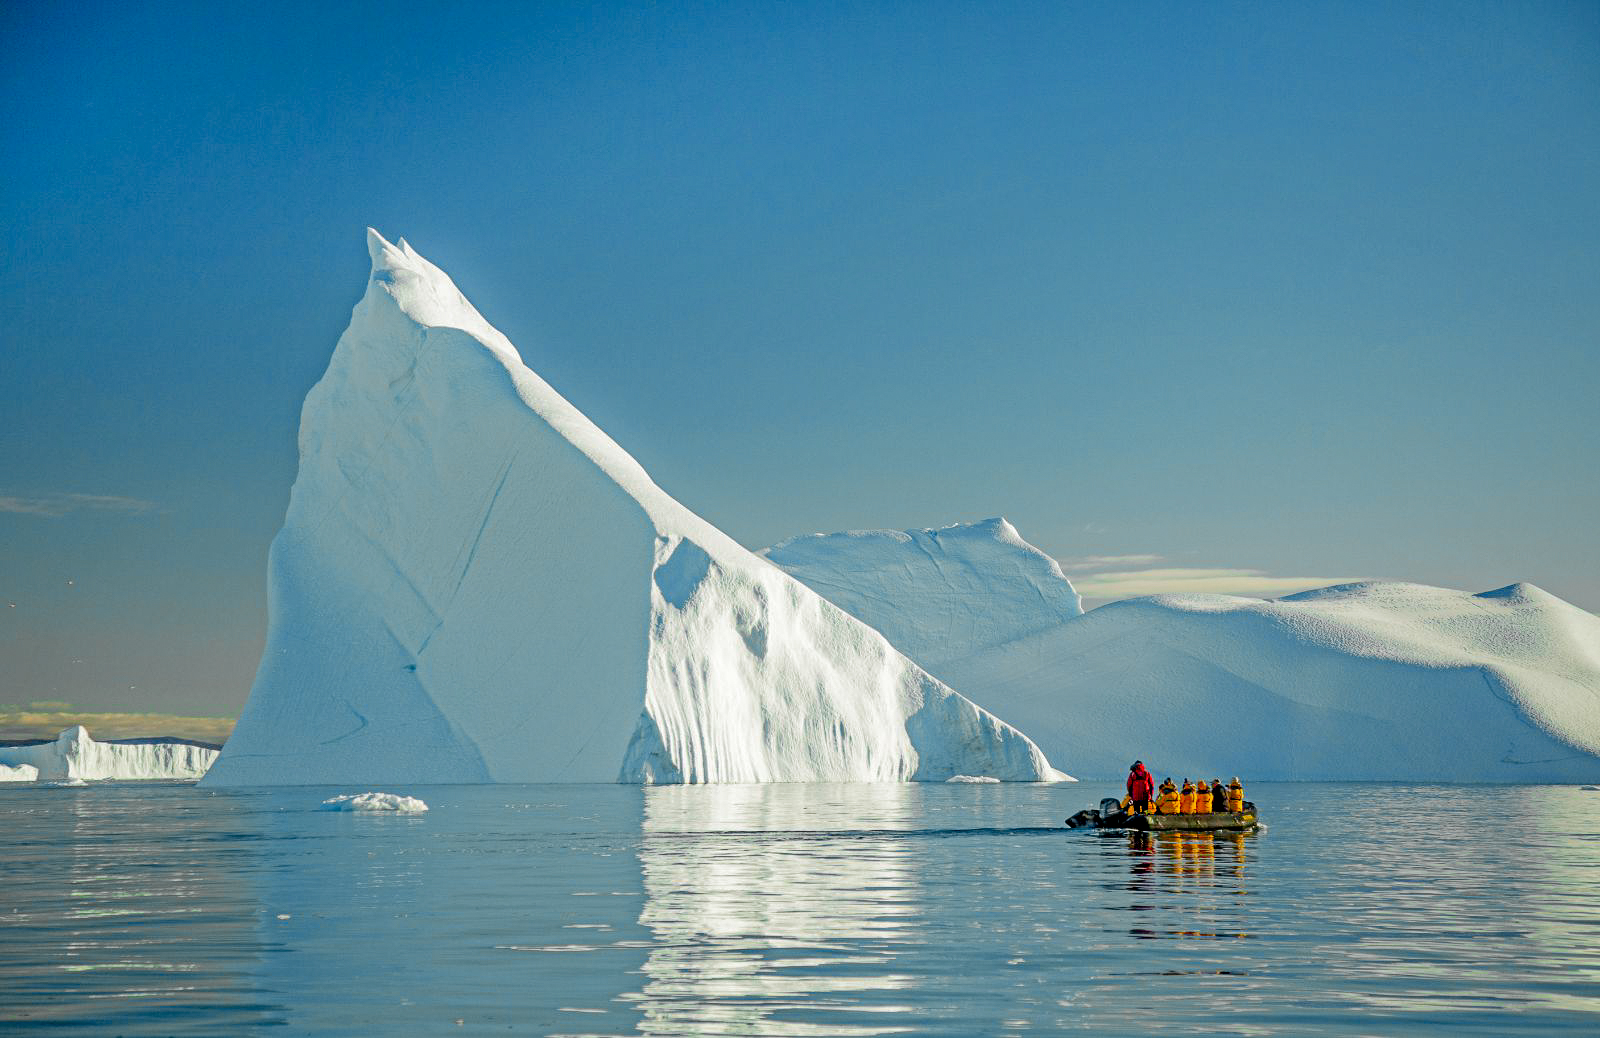 An Arctic zodiac safari from Quark Expeditions' Ultramarine cruise ship